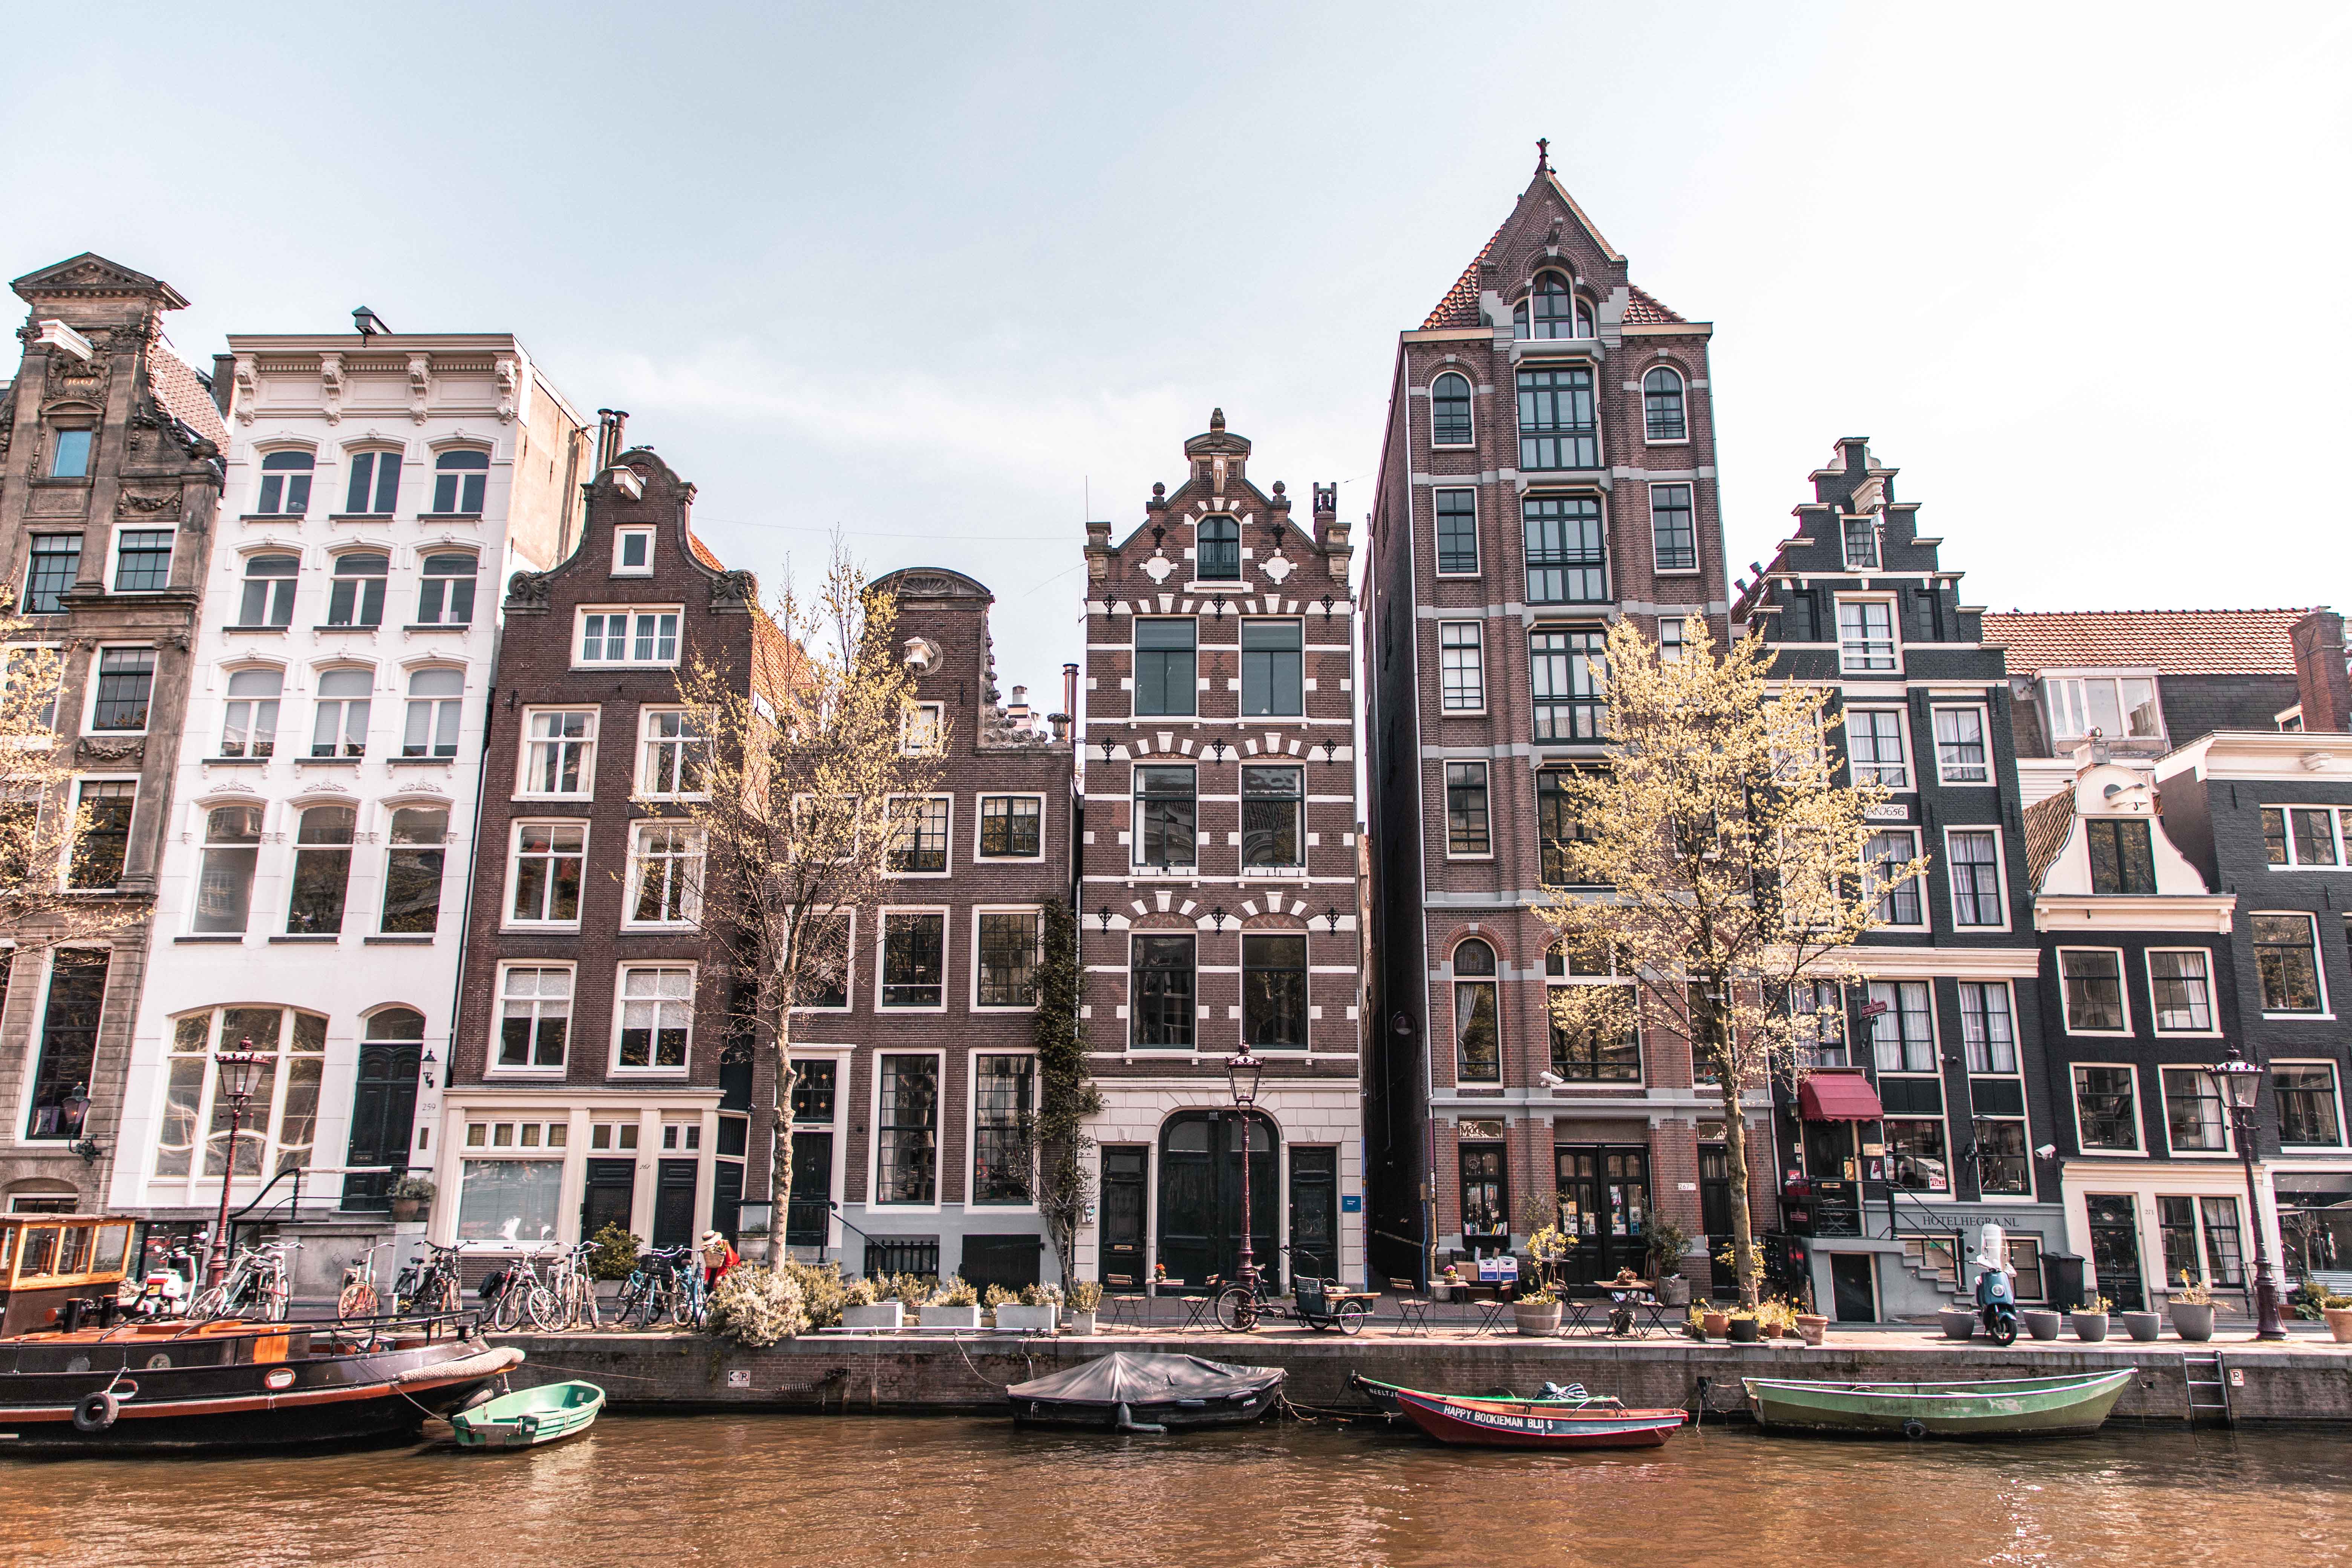 Grachten & Tulips – the perfect Amsterdam trip!